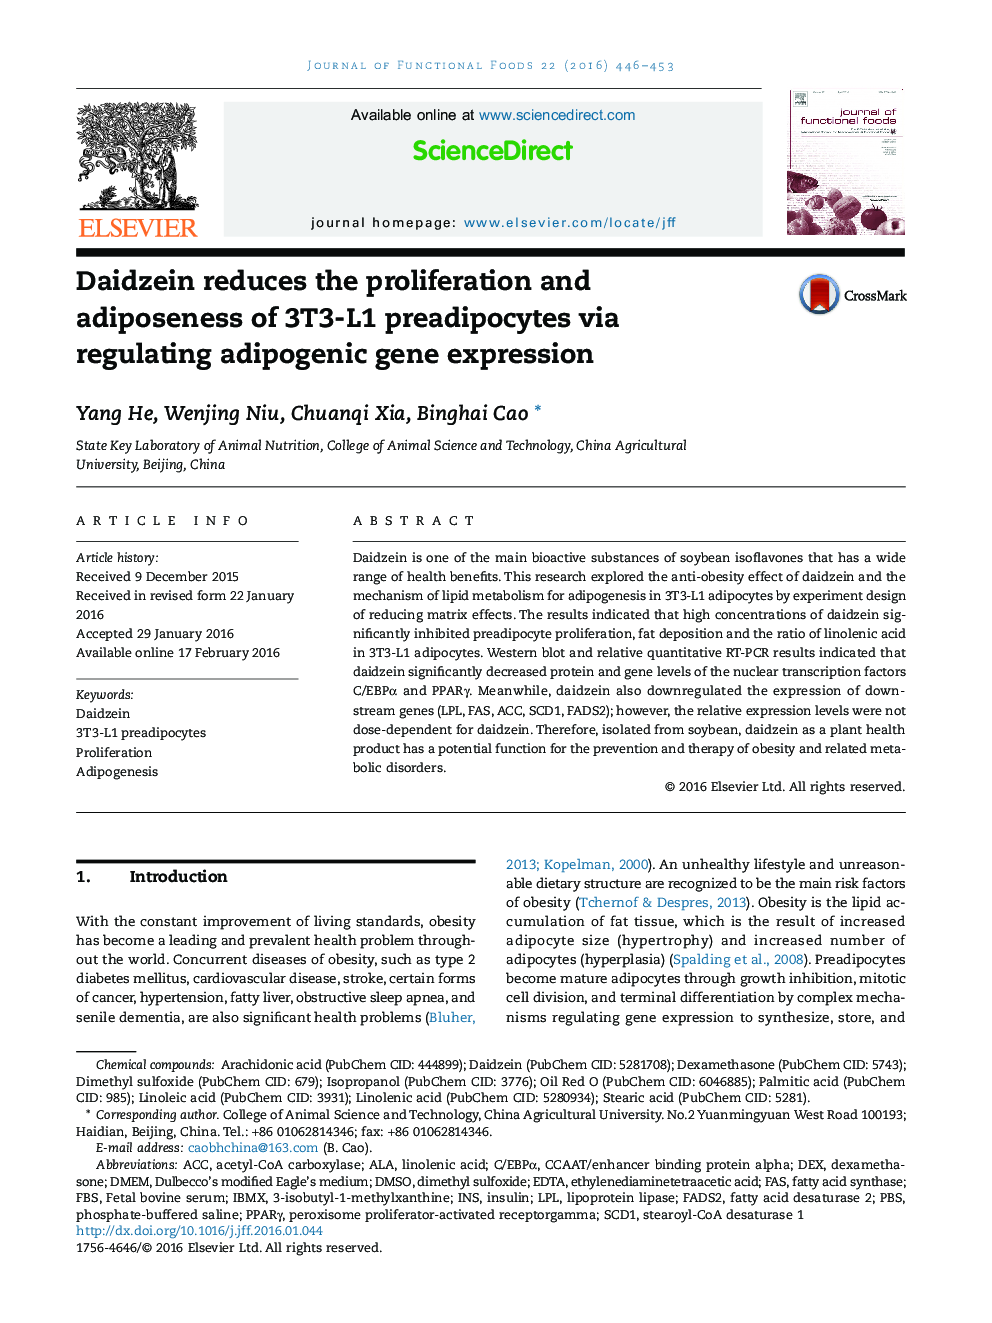 Daidzein reduces the proliferation and adiposeness of 3T3-L1 preadipocytes via regulating adipogenic gene expression